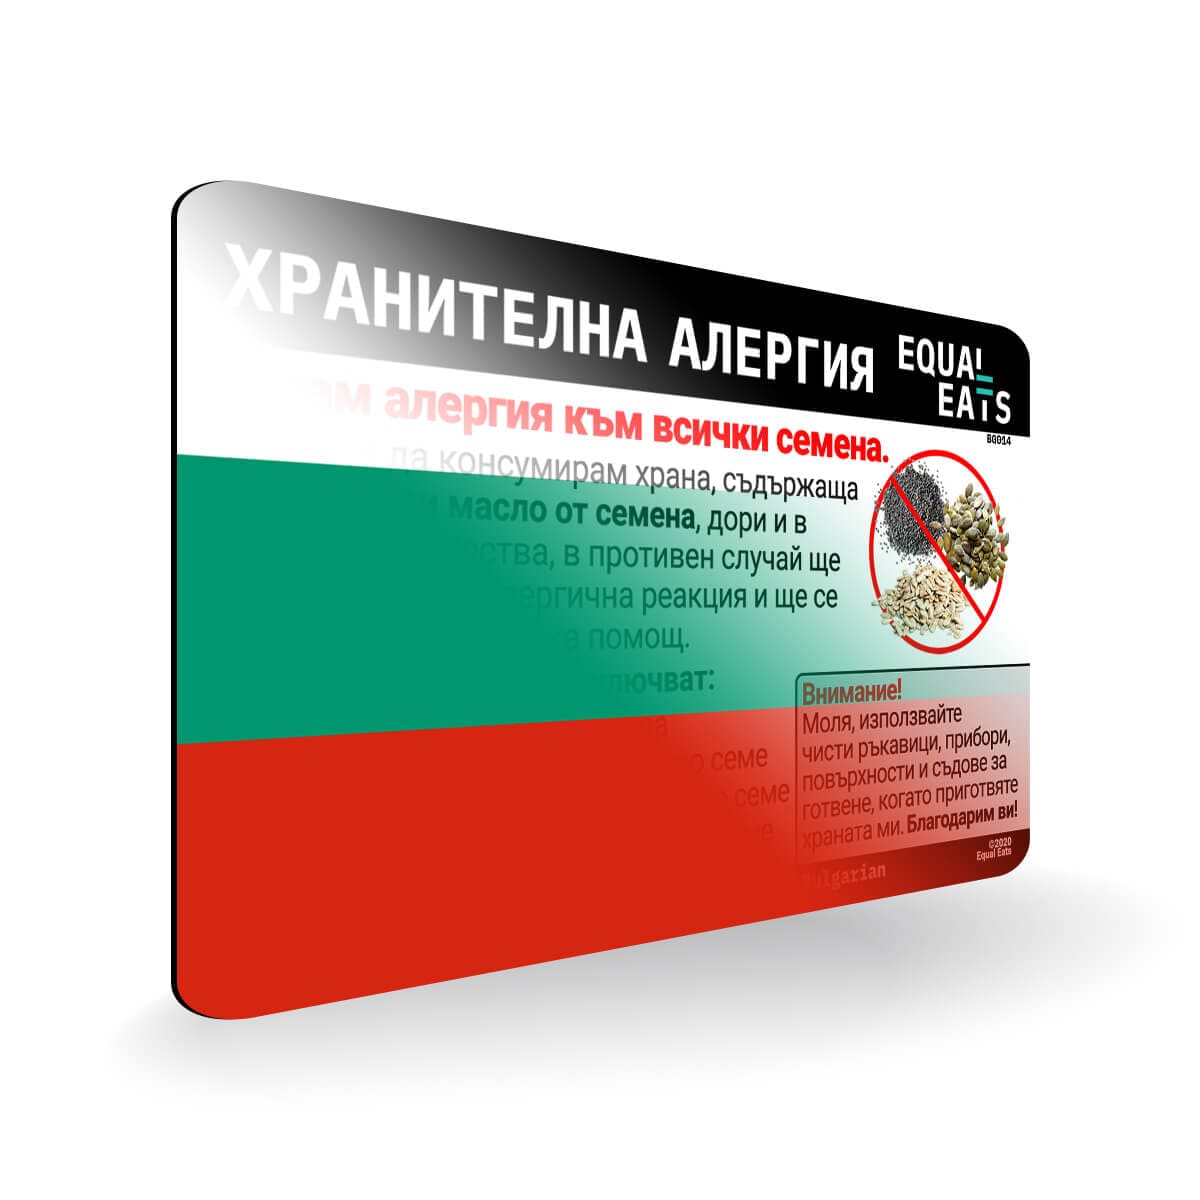 Seed Allergy in Bulgarian. Seed Allergy Card for Bulgaria